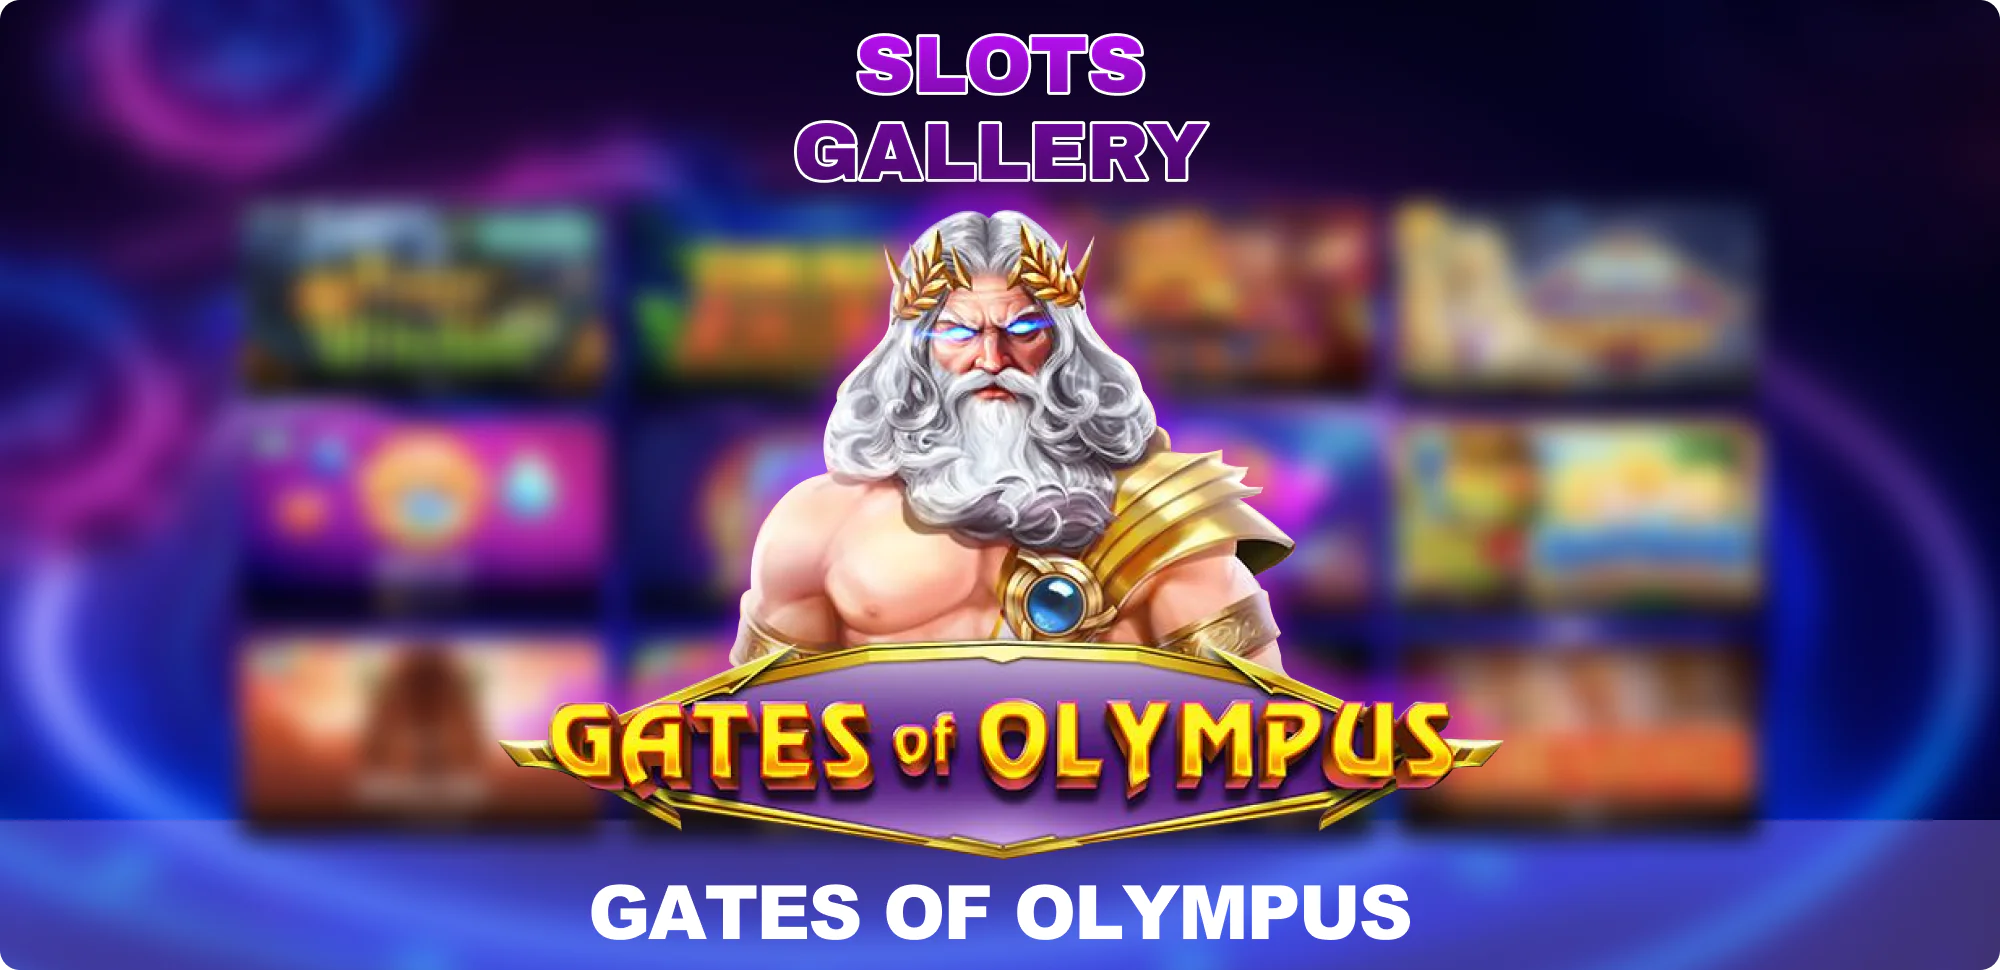 Slots Gallery Casino - Gates of Olympus